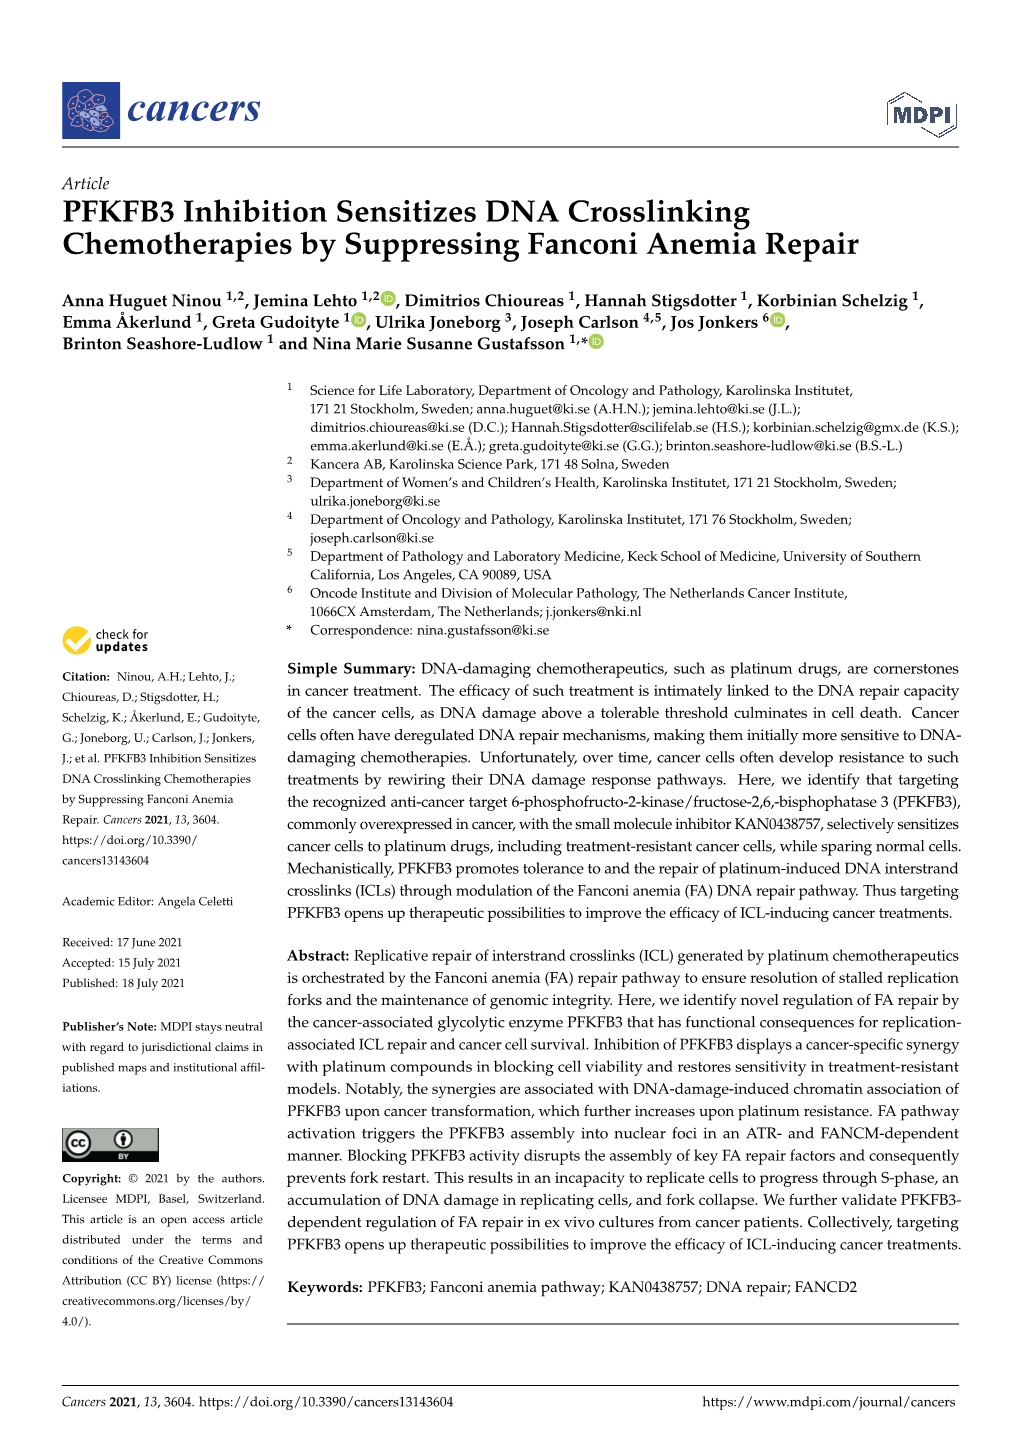 PFKFB3 Inhibition Sensitizes DNA Crosslinking Chemotherapies by Suppressing Fanconi Anemia Repair